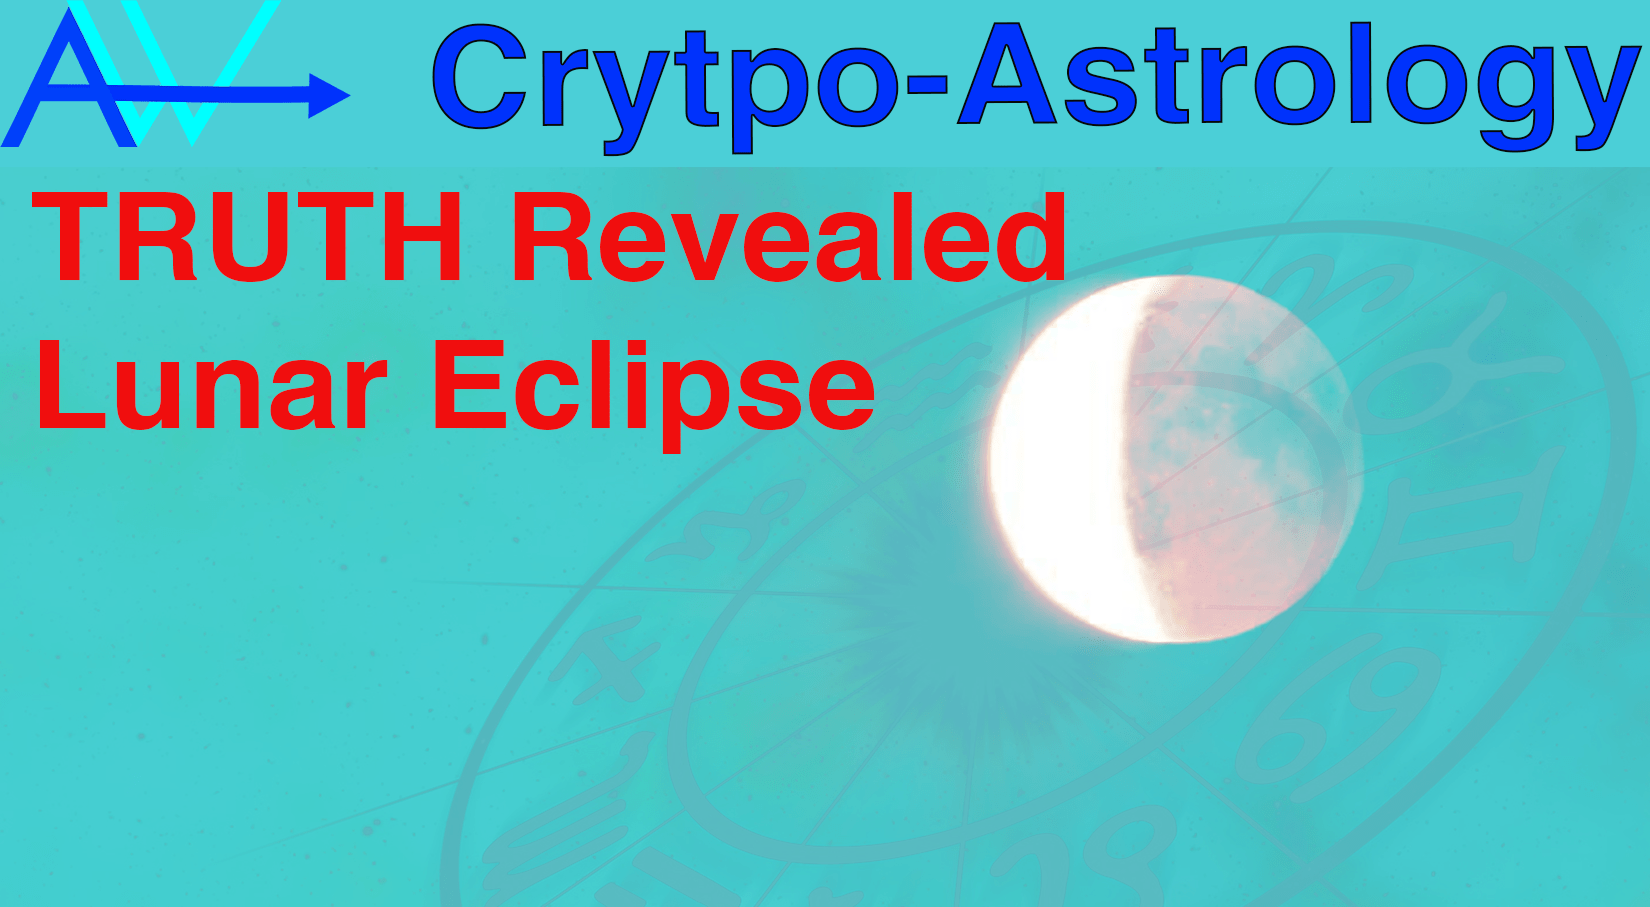 Lunar Eclipse - SECRETS UNVEILED - CryptoAstrology